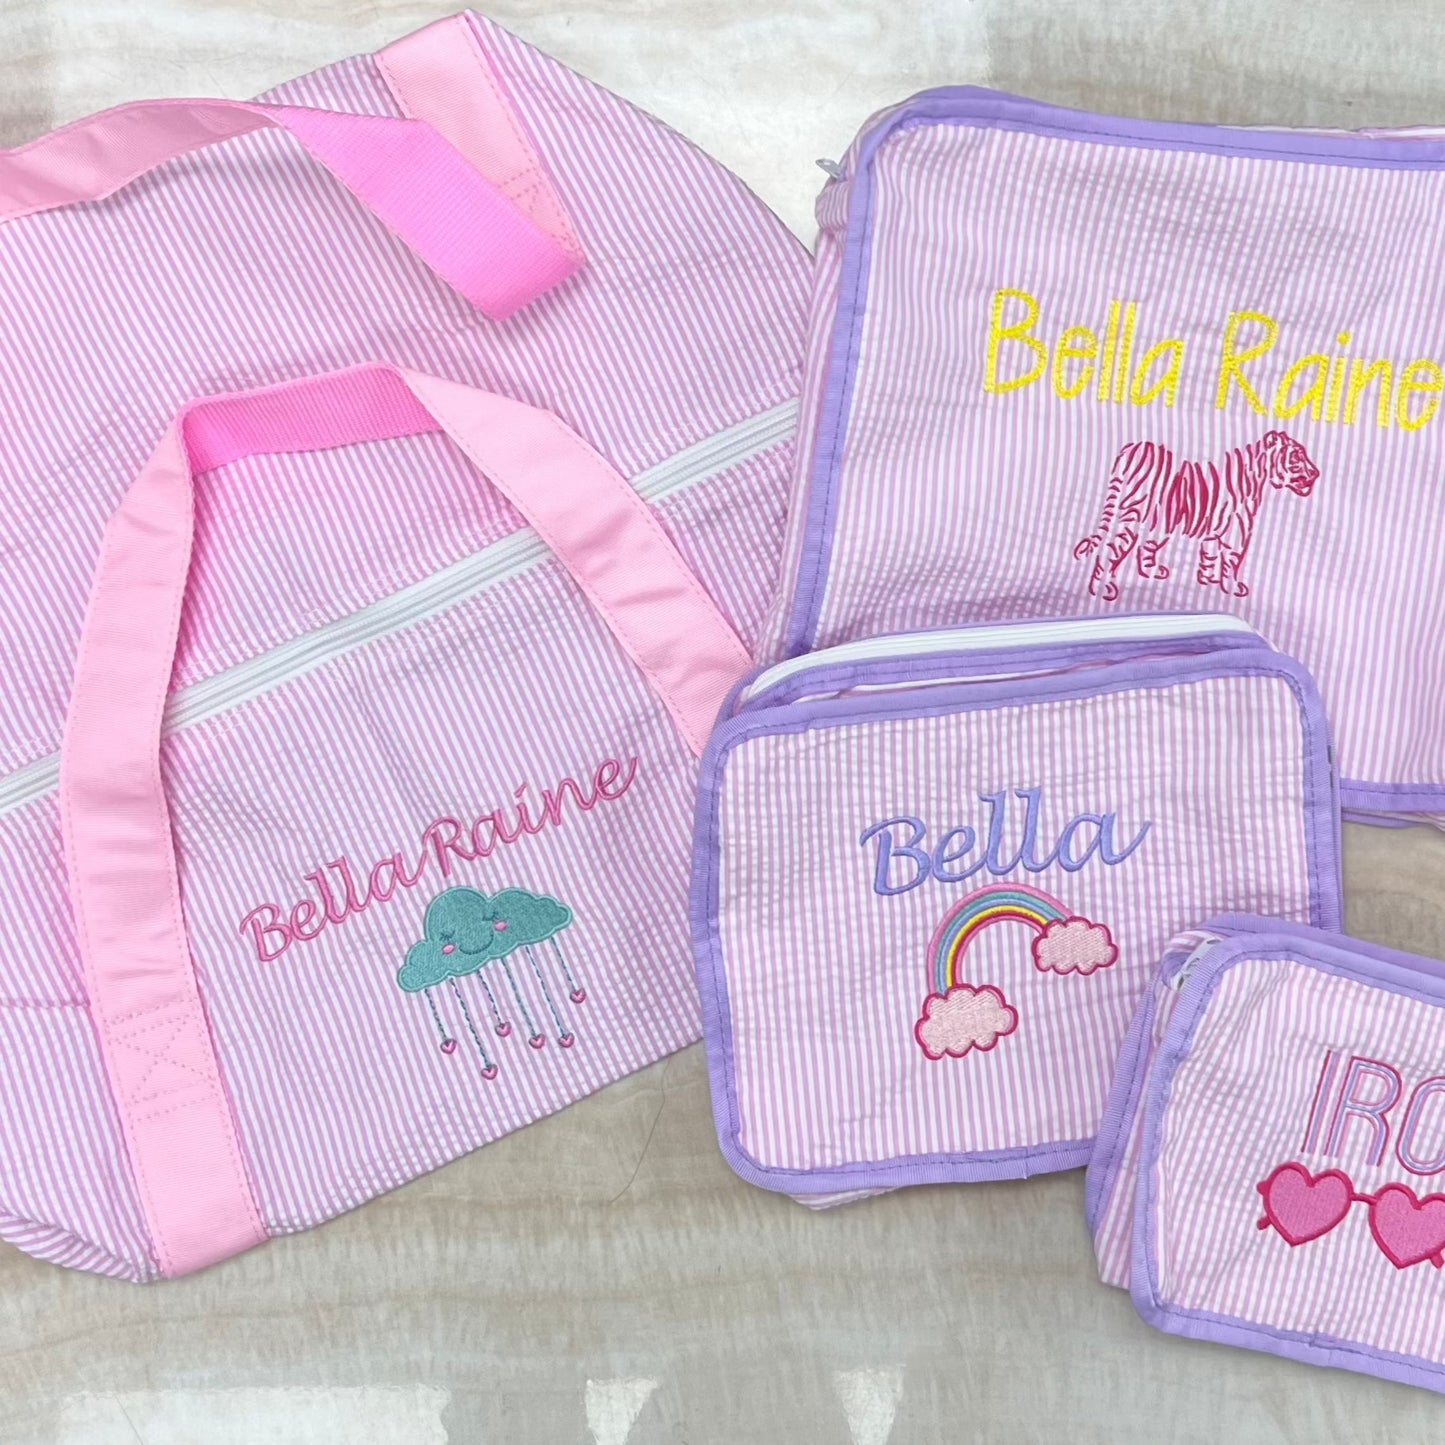 Personalized Seersucker Baby Pink Duffel Bag - Give Wink